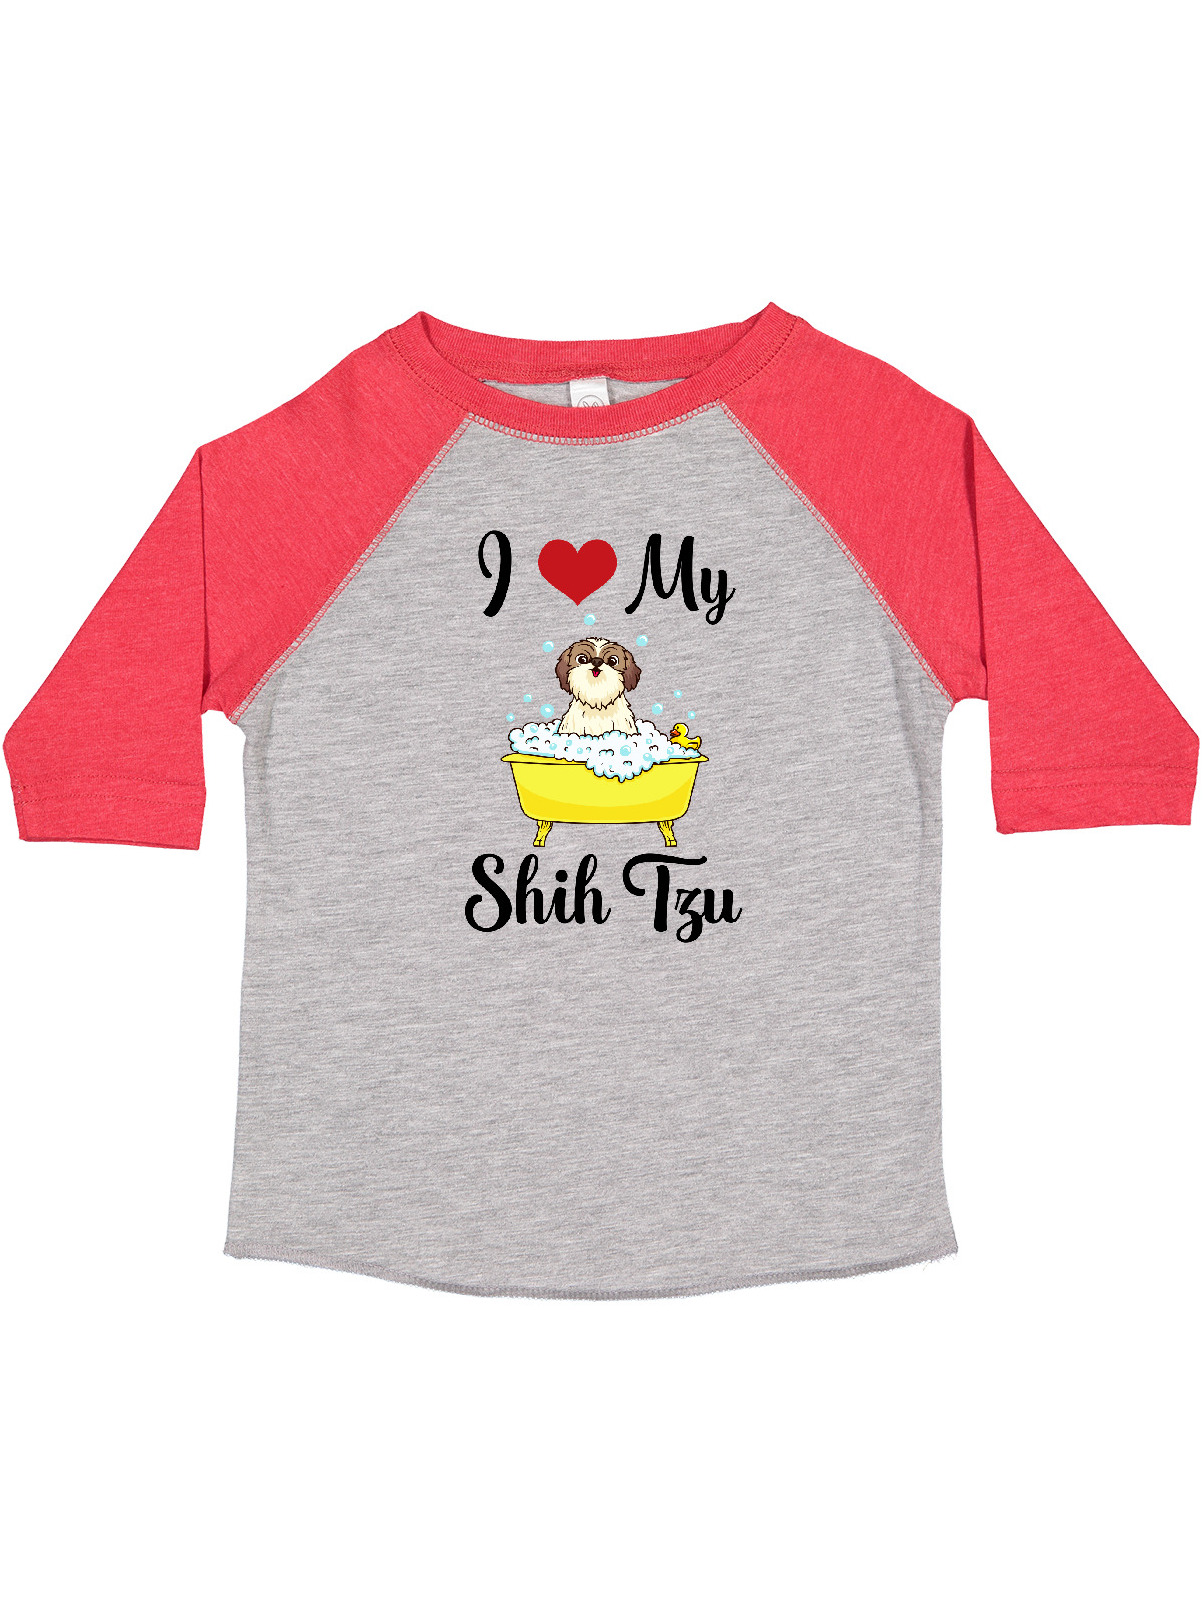 Inktastic I Love My Shih Tzu Dog Gifts Boys or Girls Toddler T-Shirt - image 1 of 4